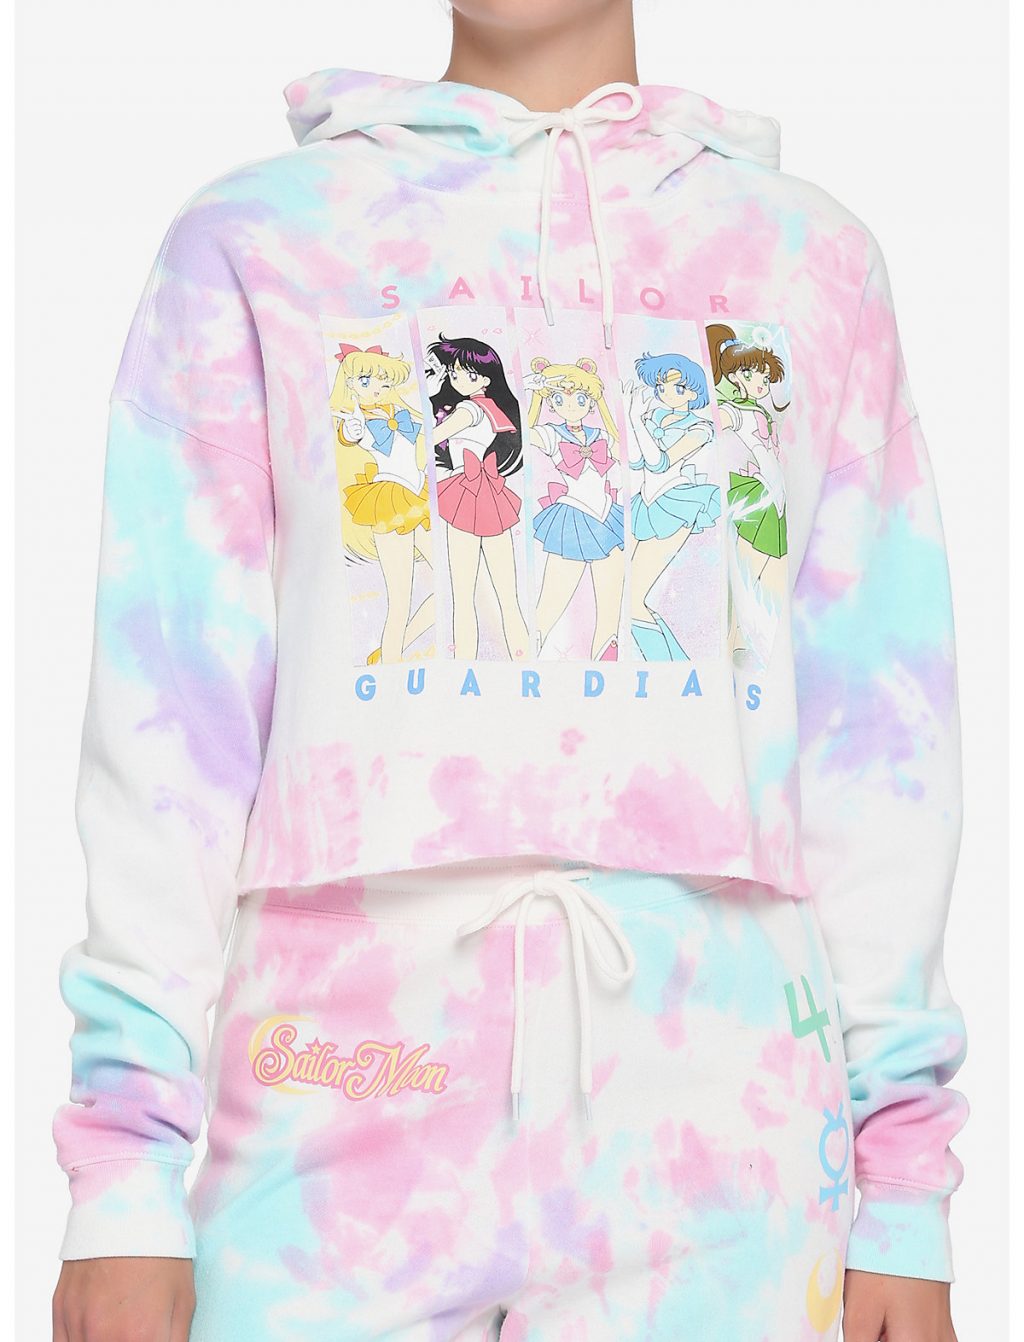 Hot Topic: Sailor Moon Girls Hoodie/Pant Set